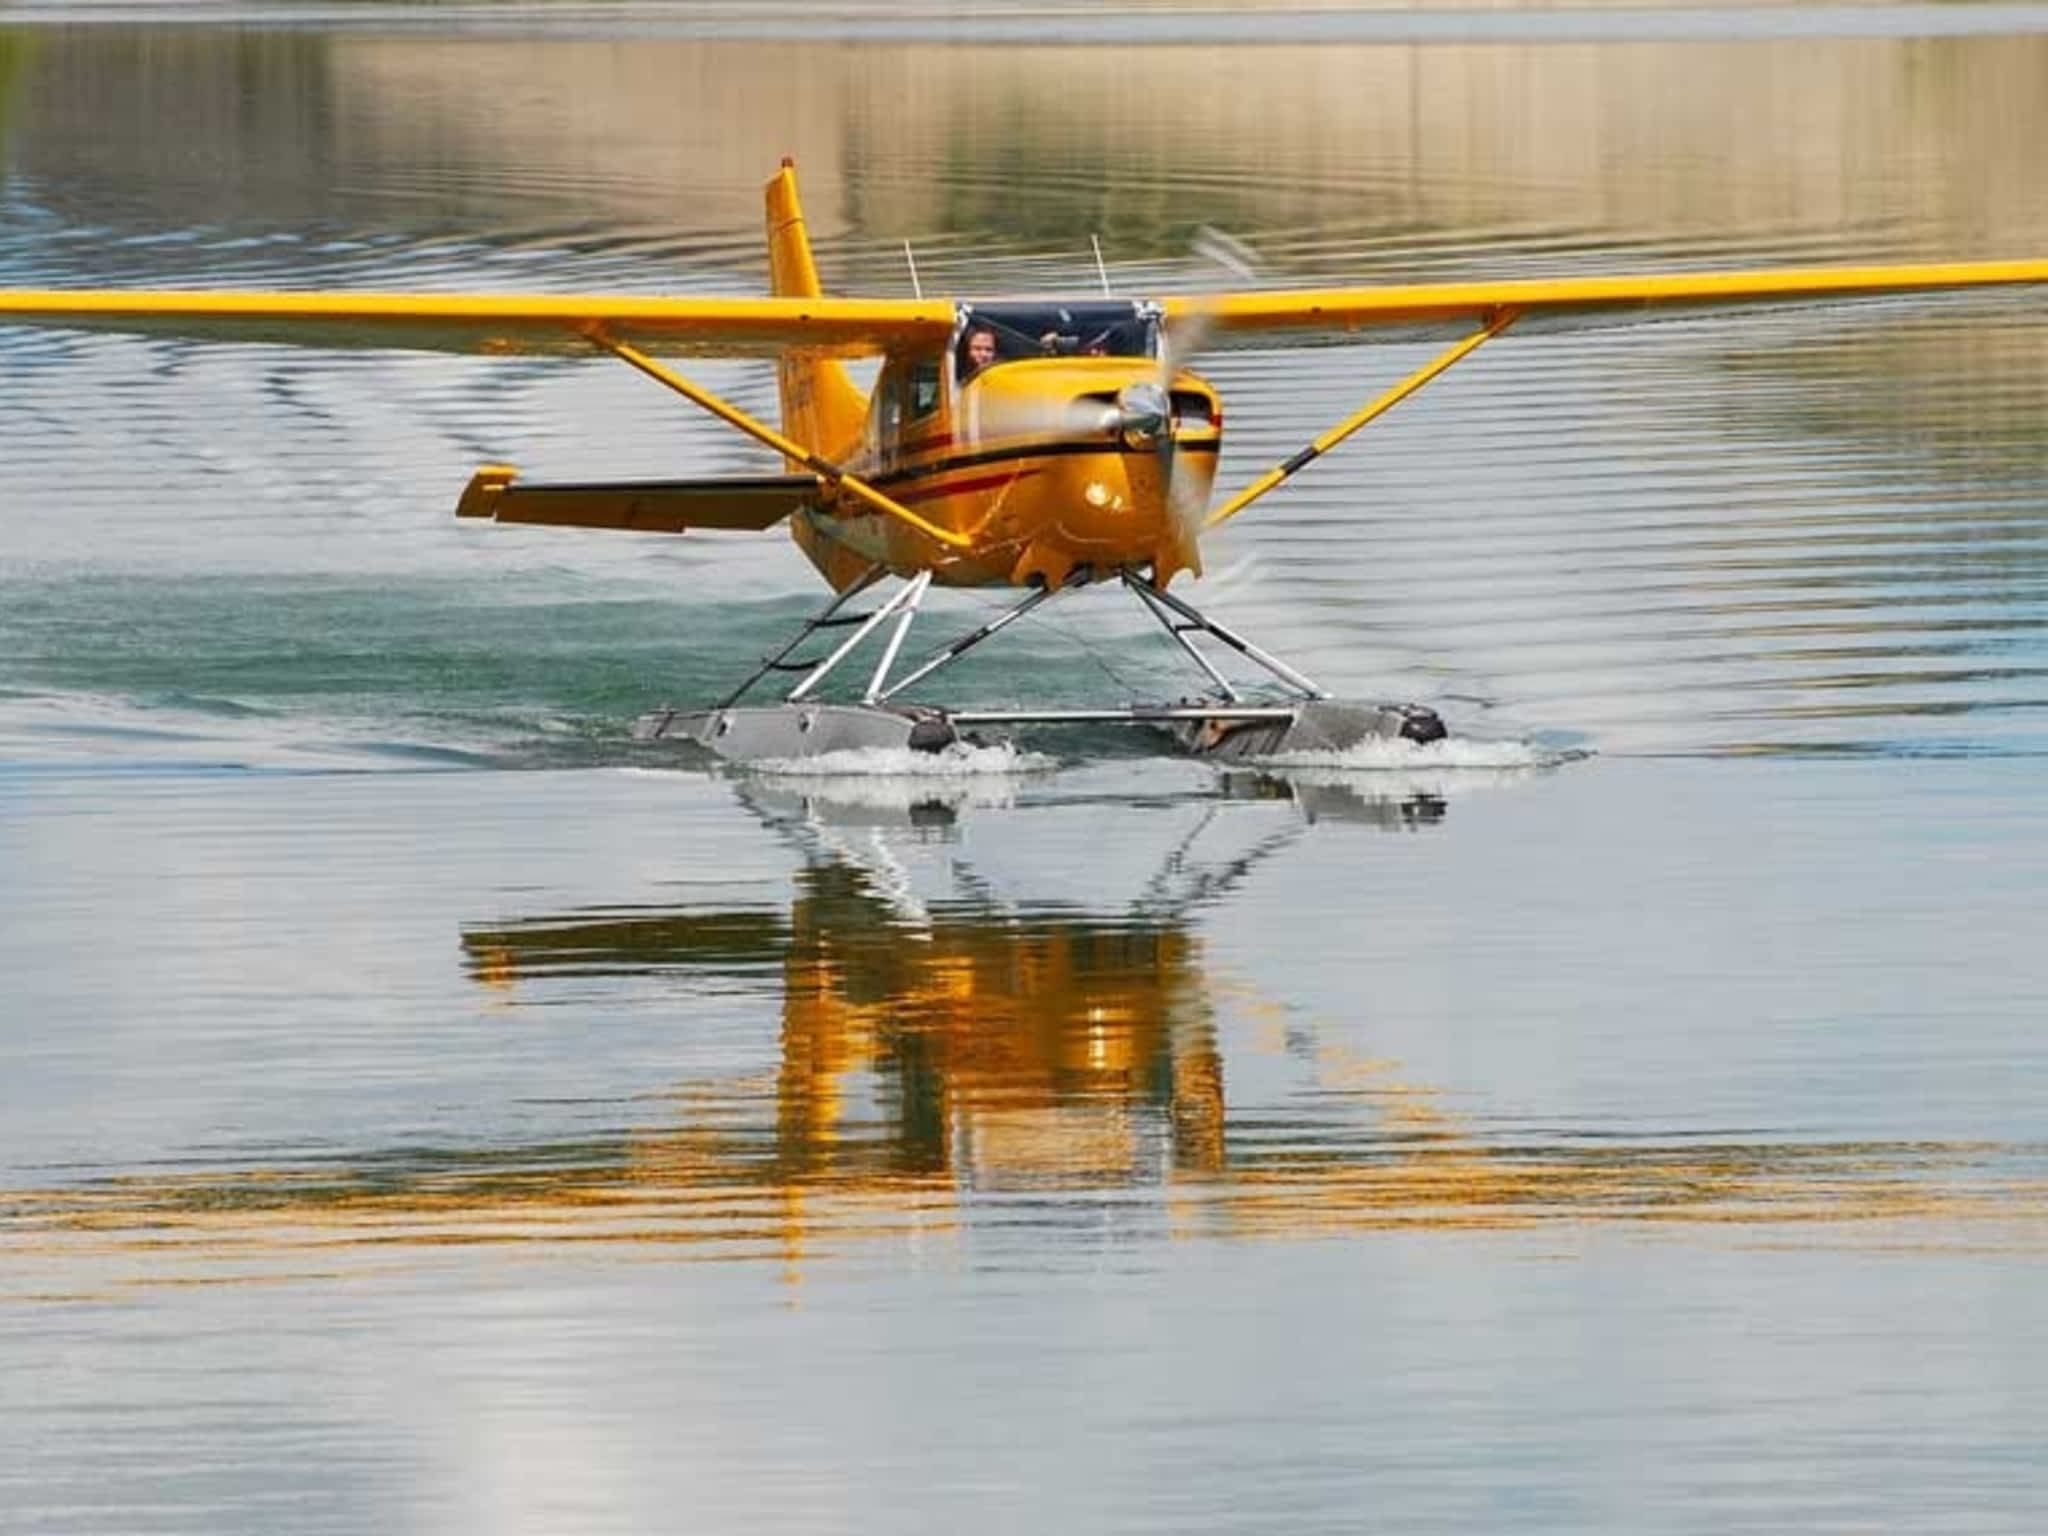 photo Alpine Aviation - Yukon Ltd